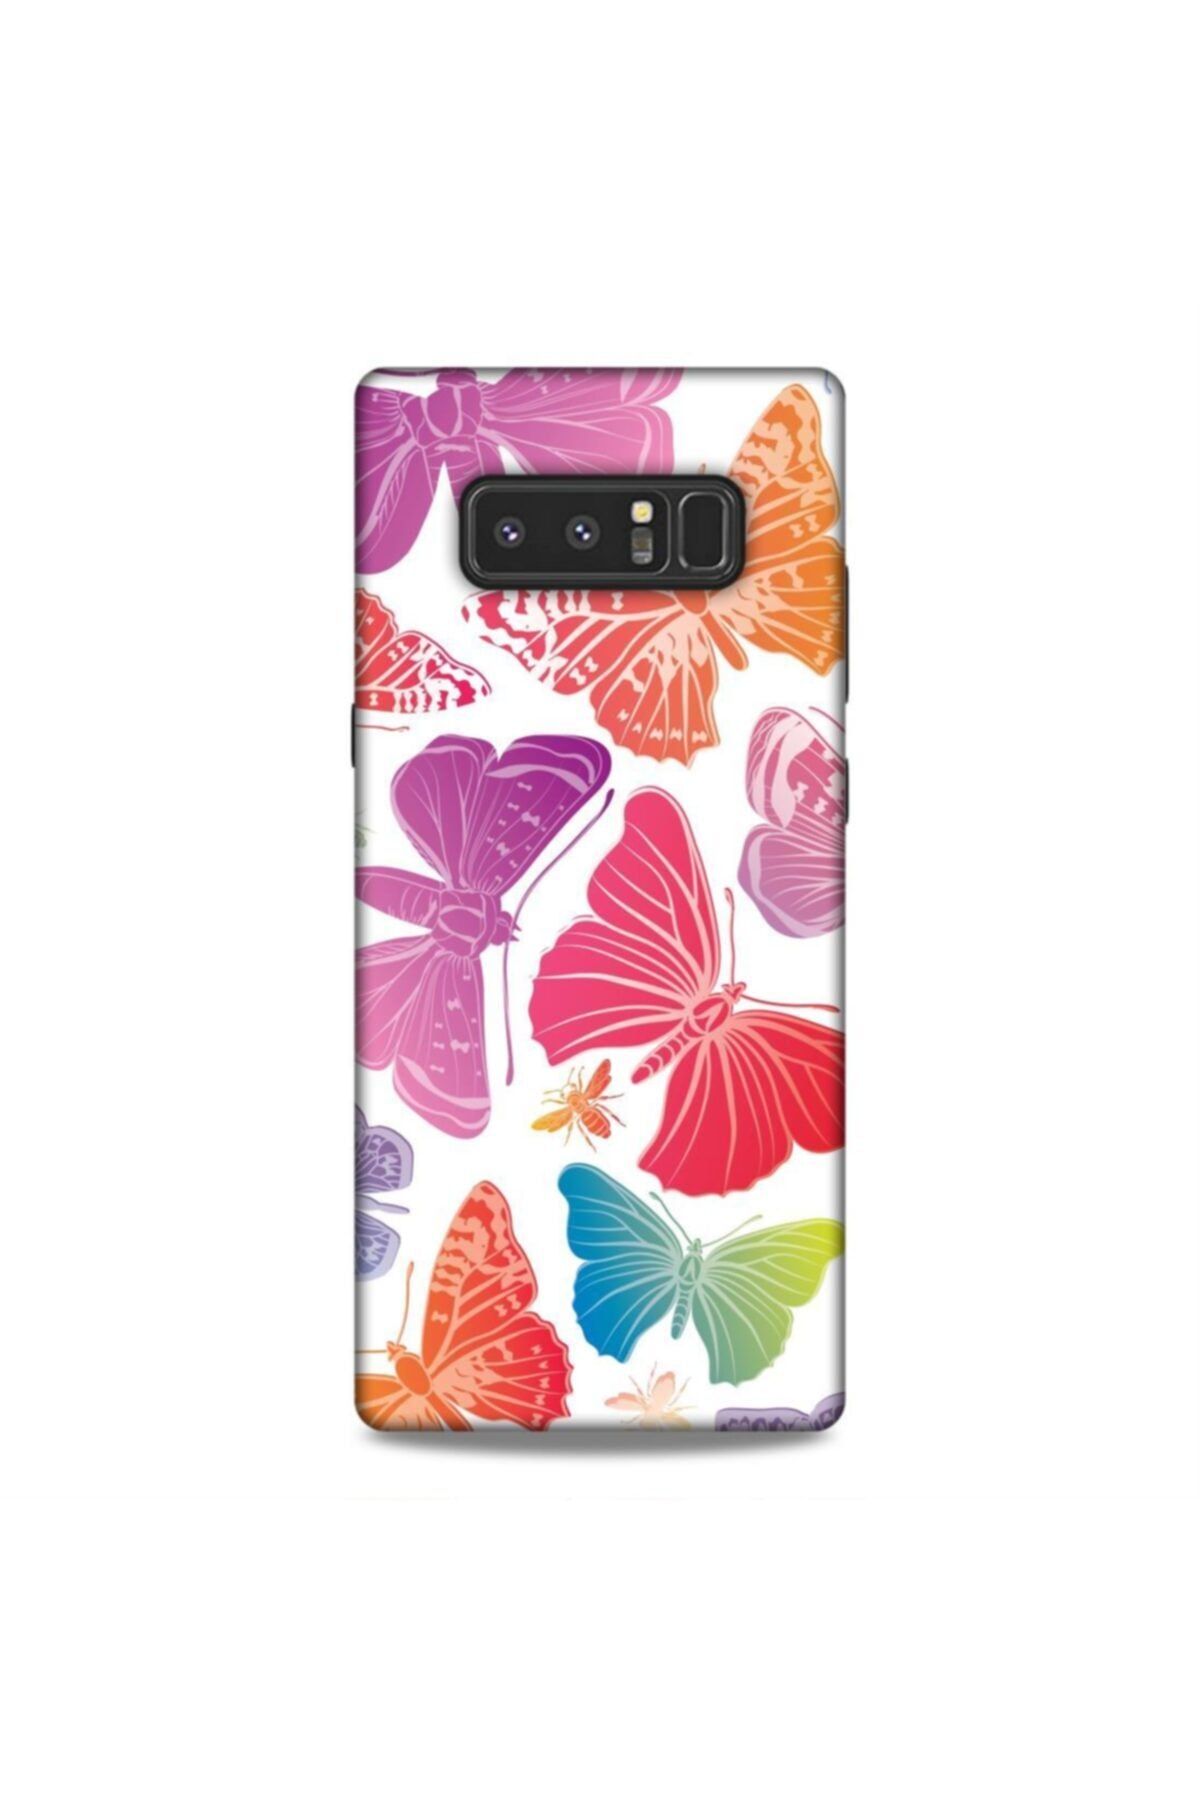 Pickcase Samsung Galaxy Note 8 Desenli Arka Kapak Kelebekler Kılıf